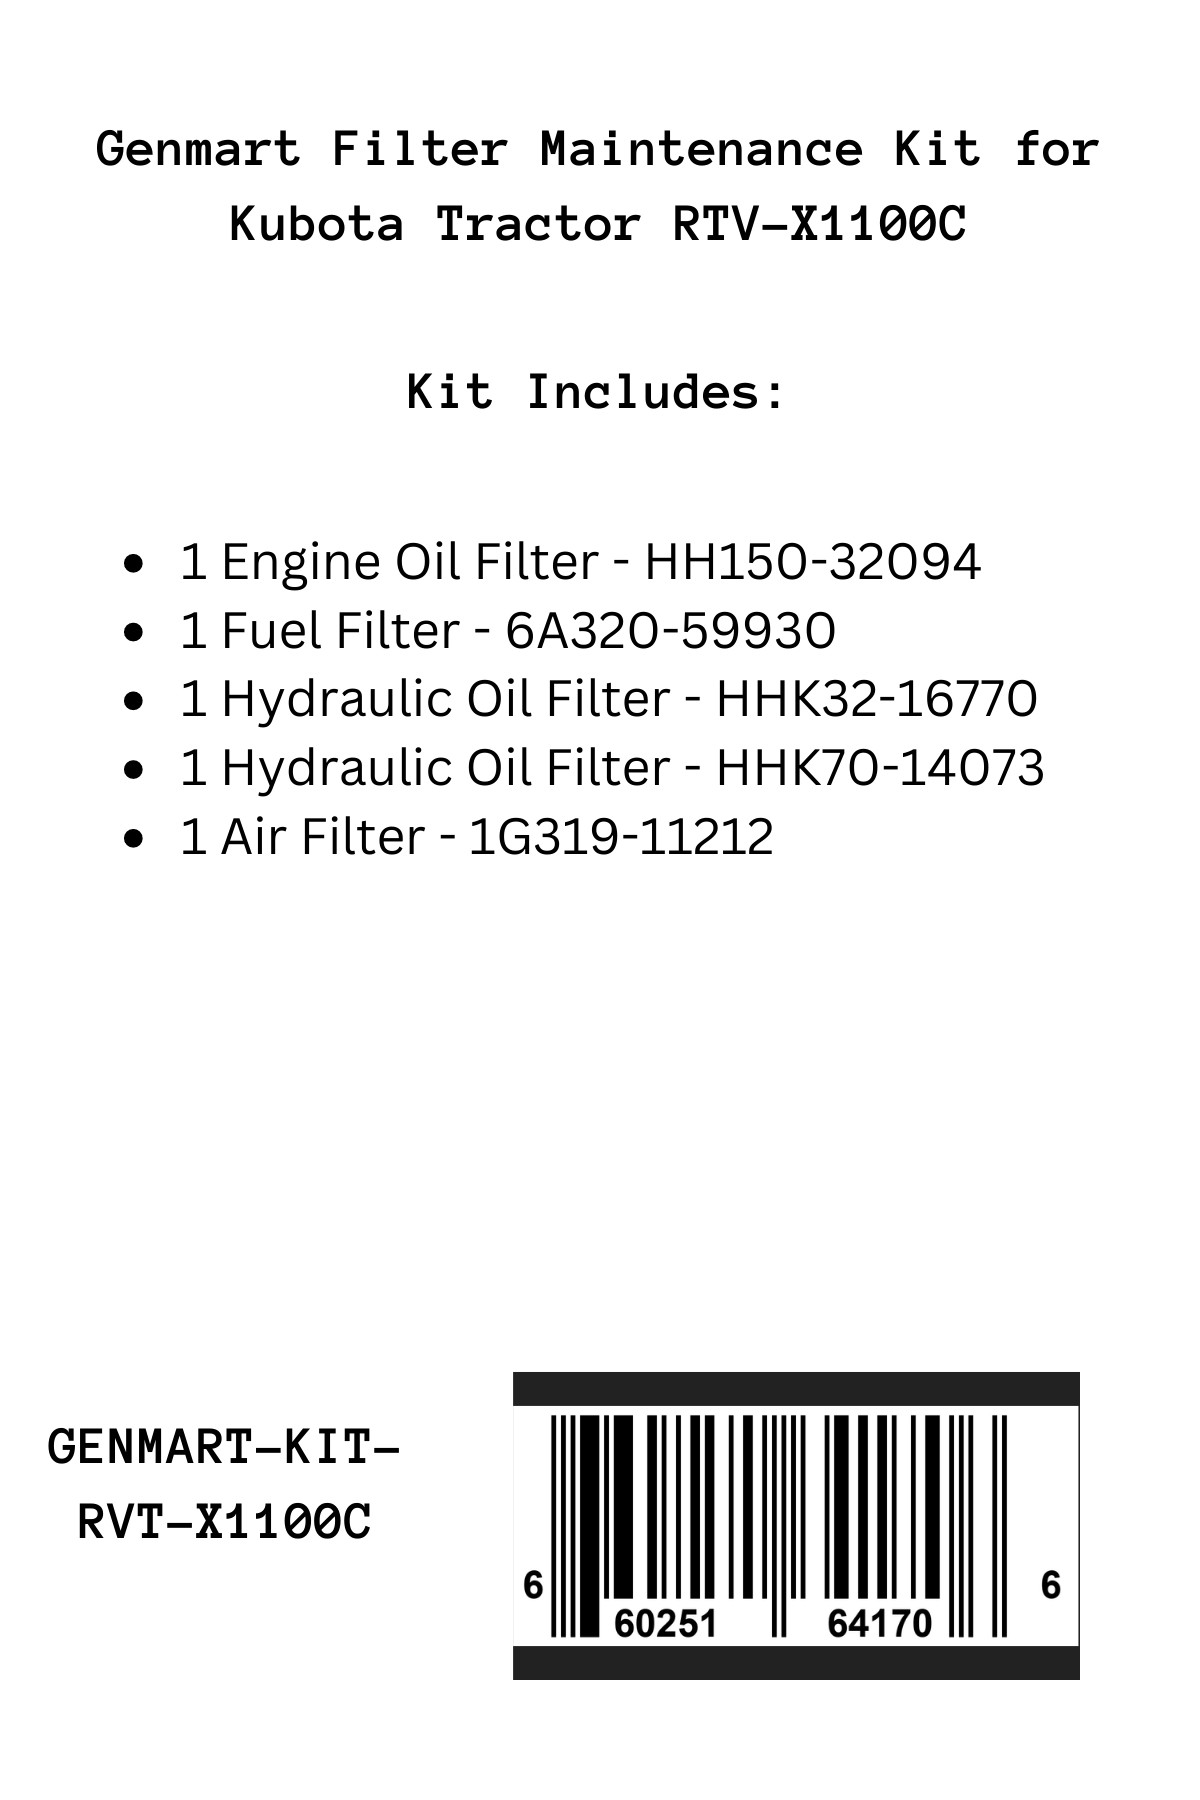 Genmart Maintenance Kit for Kubota Tractor RTV-X1100C